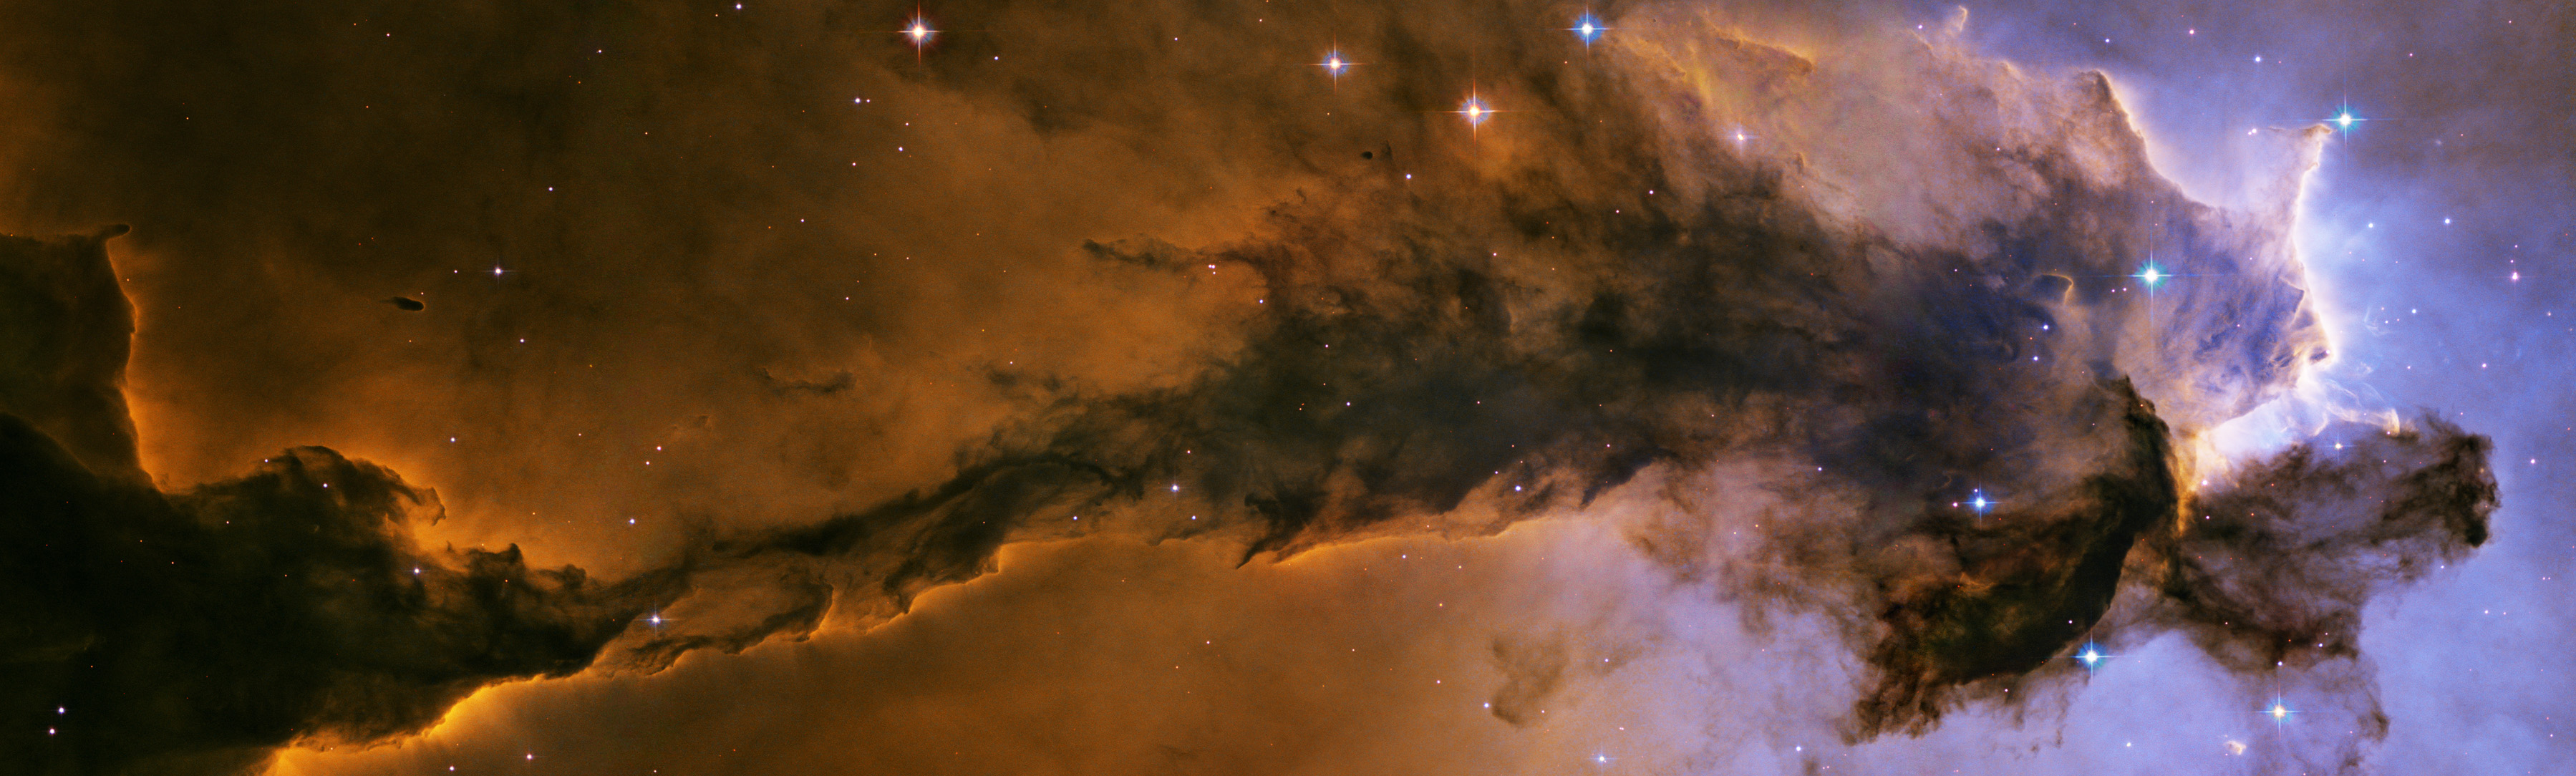 outer space, stars, Hubble, Eagle nebula - desktop wallpaper